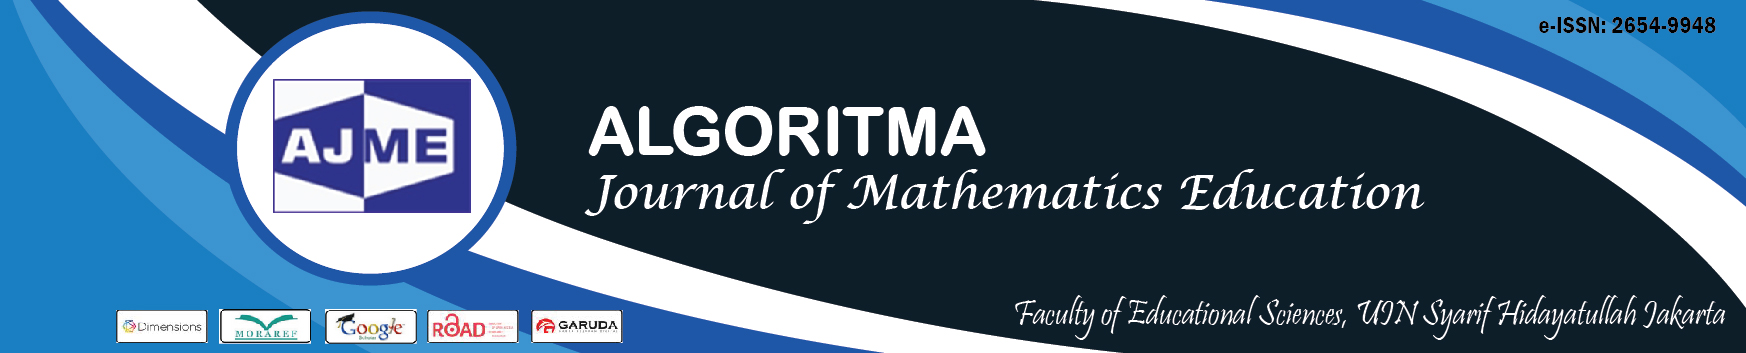 ALGORITMA : Journal of Mathematics Education